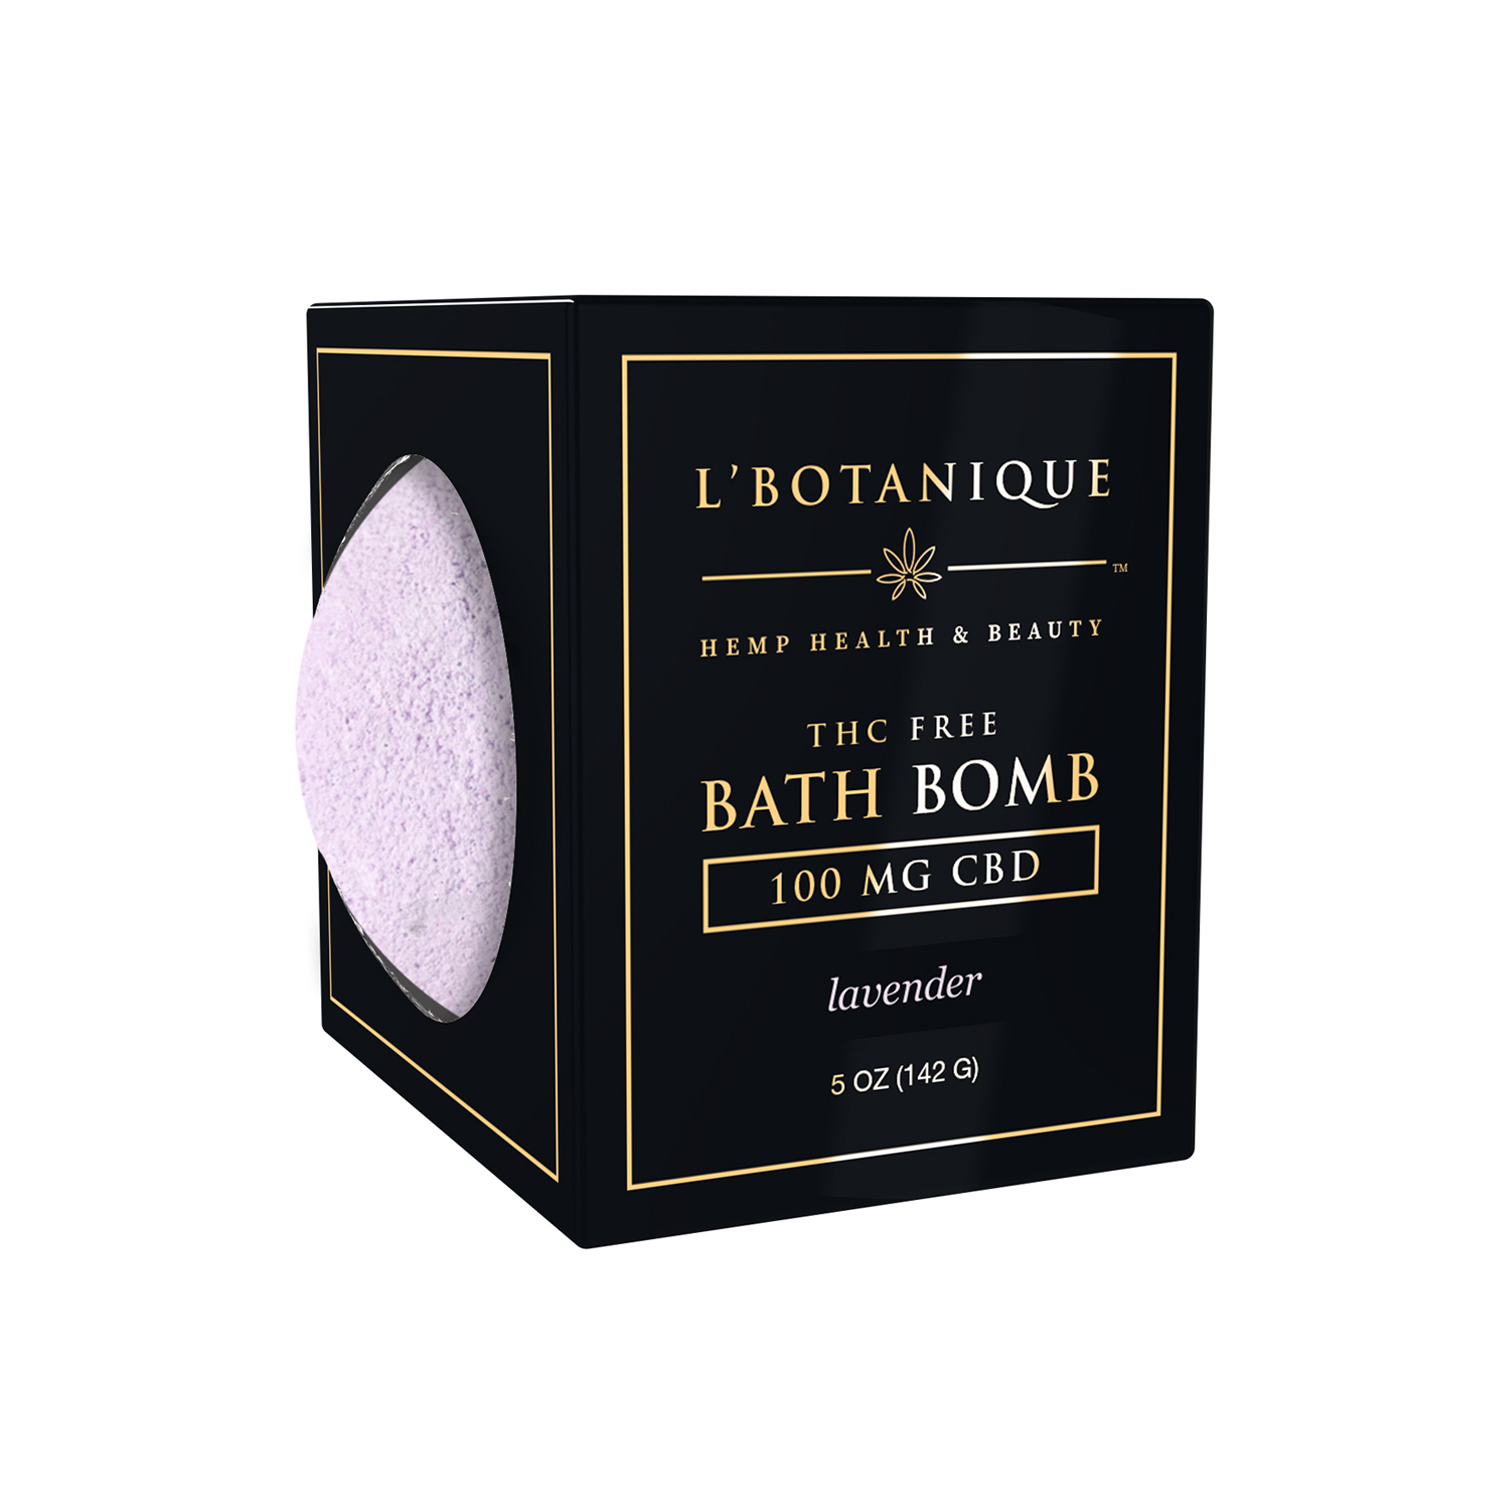 L'Botanique hemp health and beauty brand THC FREE bath bomb with 100 mg cbd lavender scented